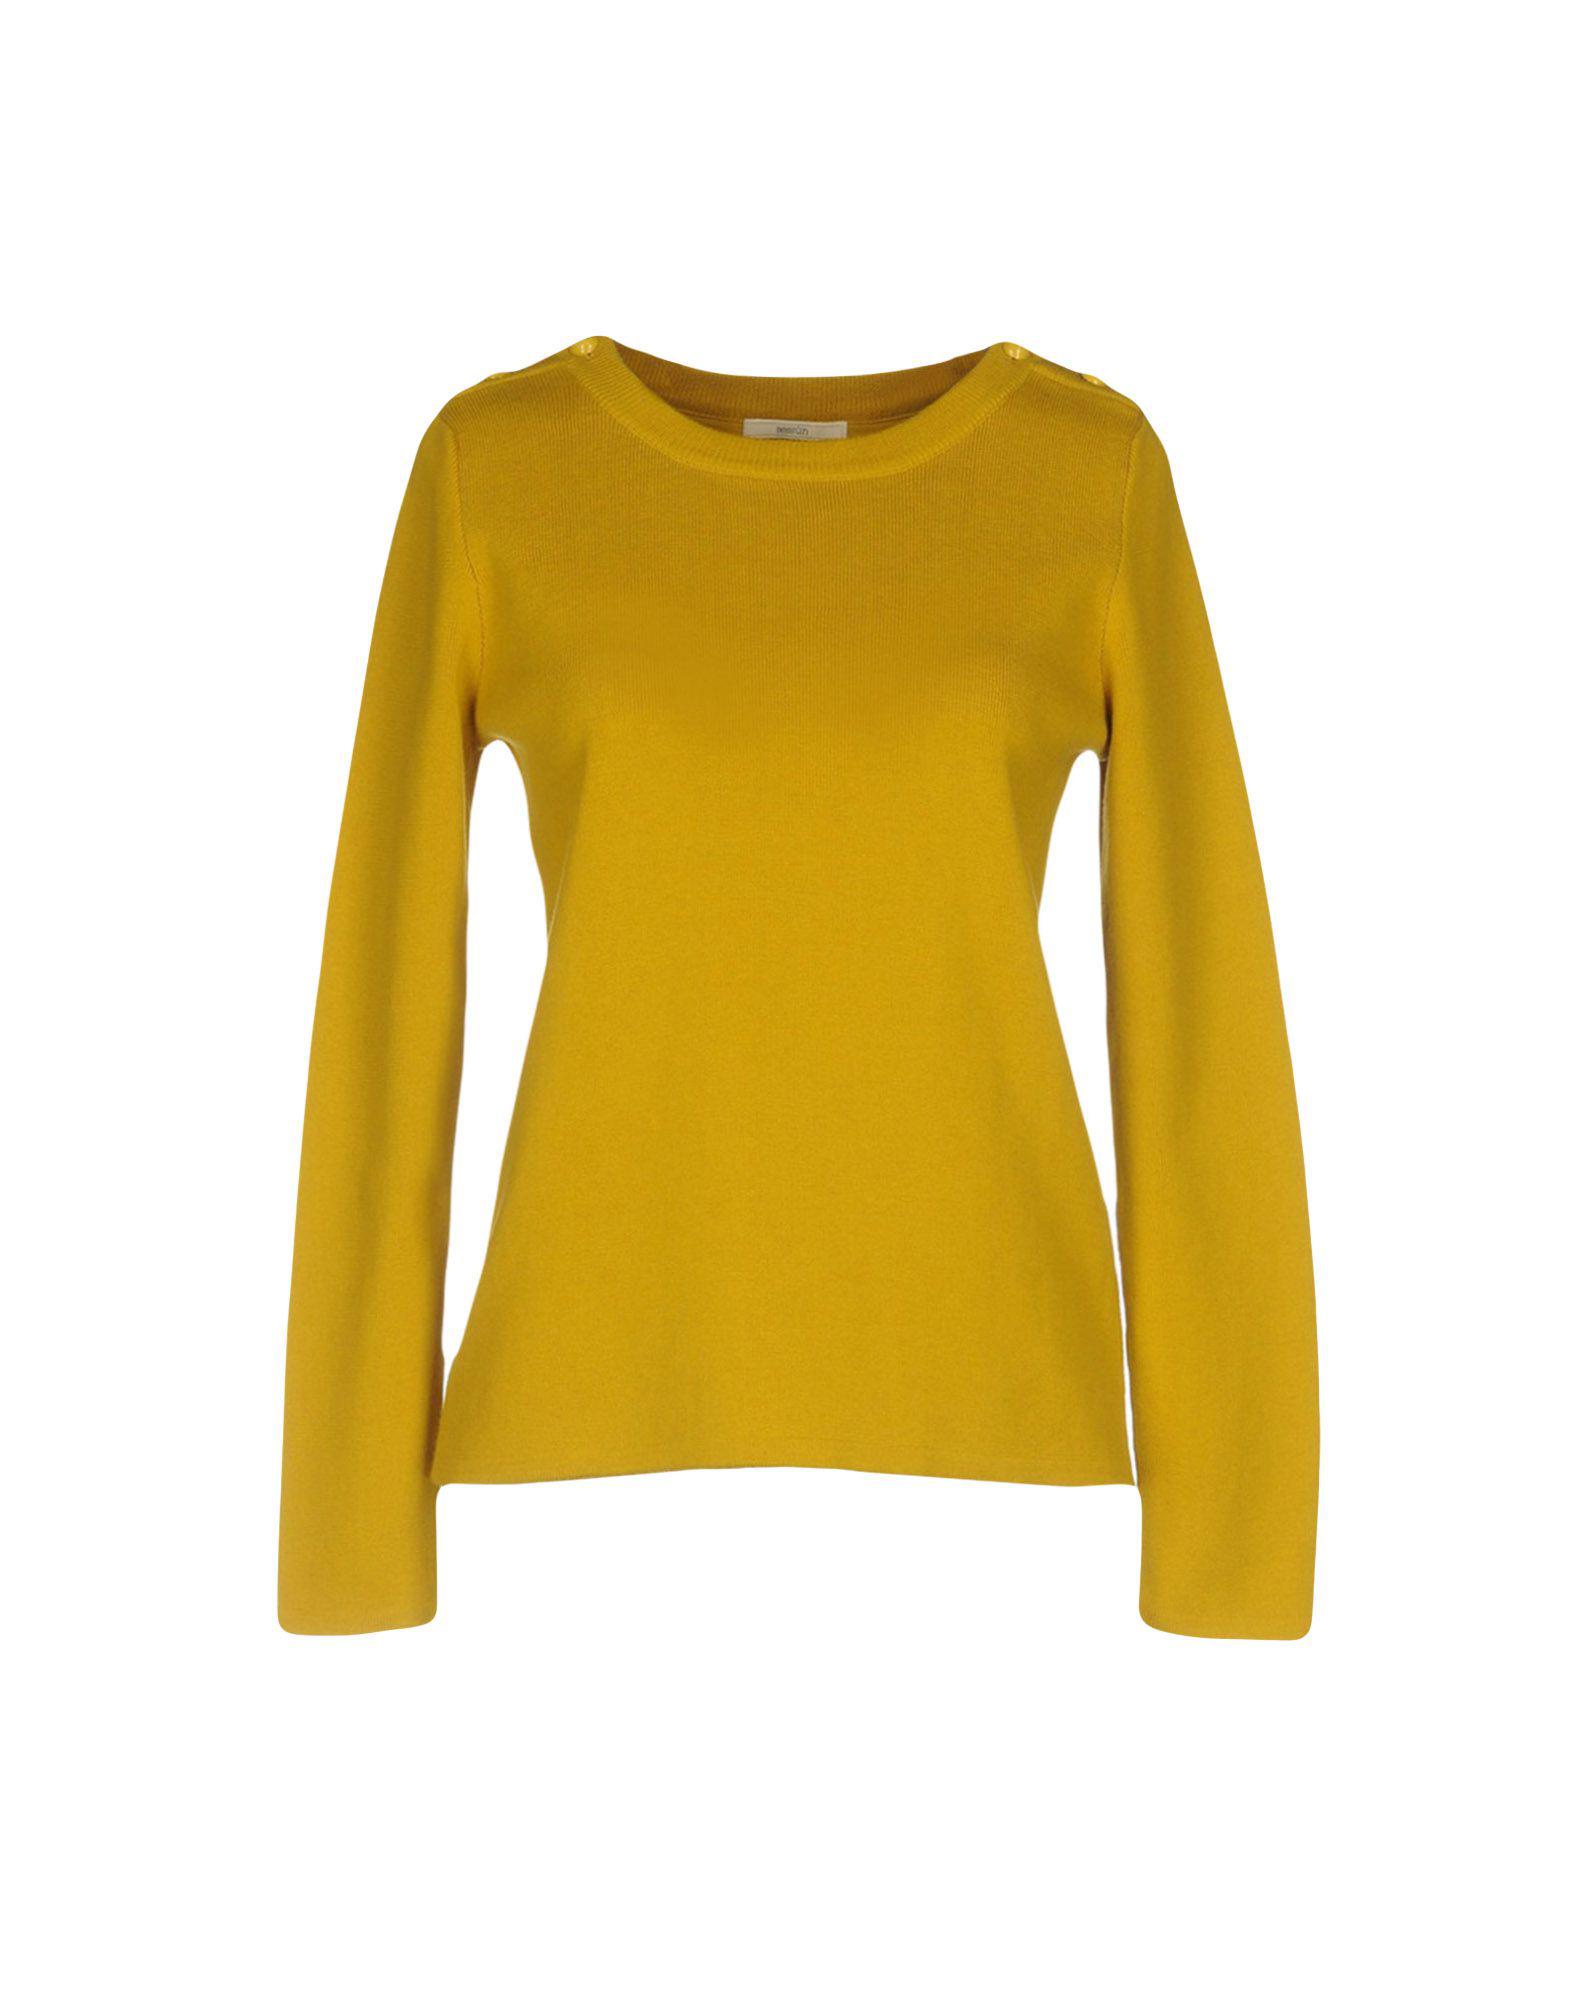 Lyst - Sessun Sweater in Yellow